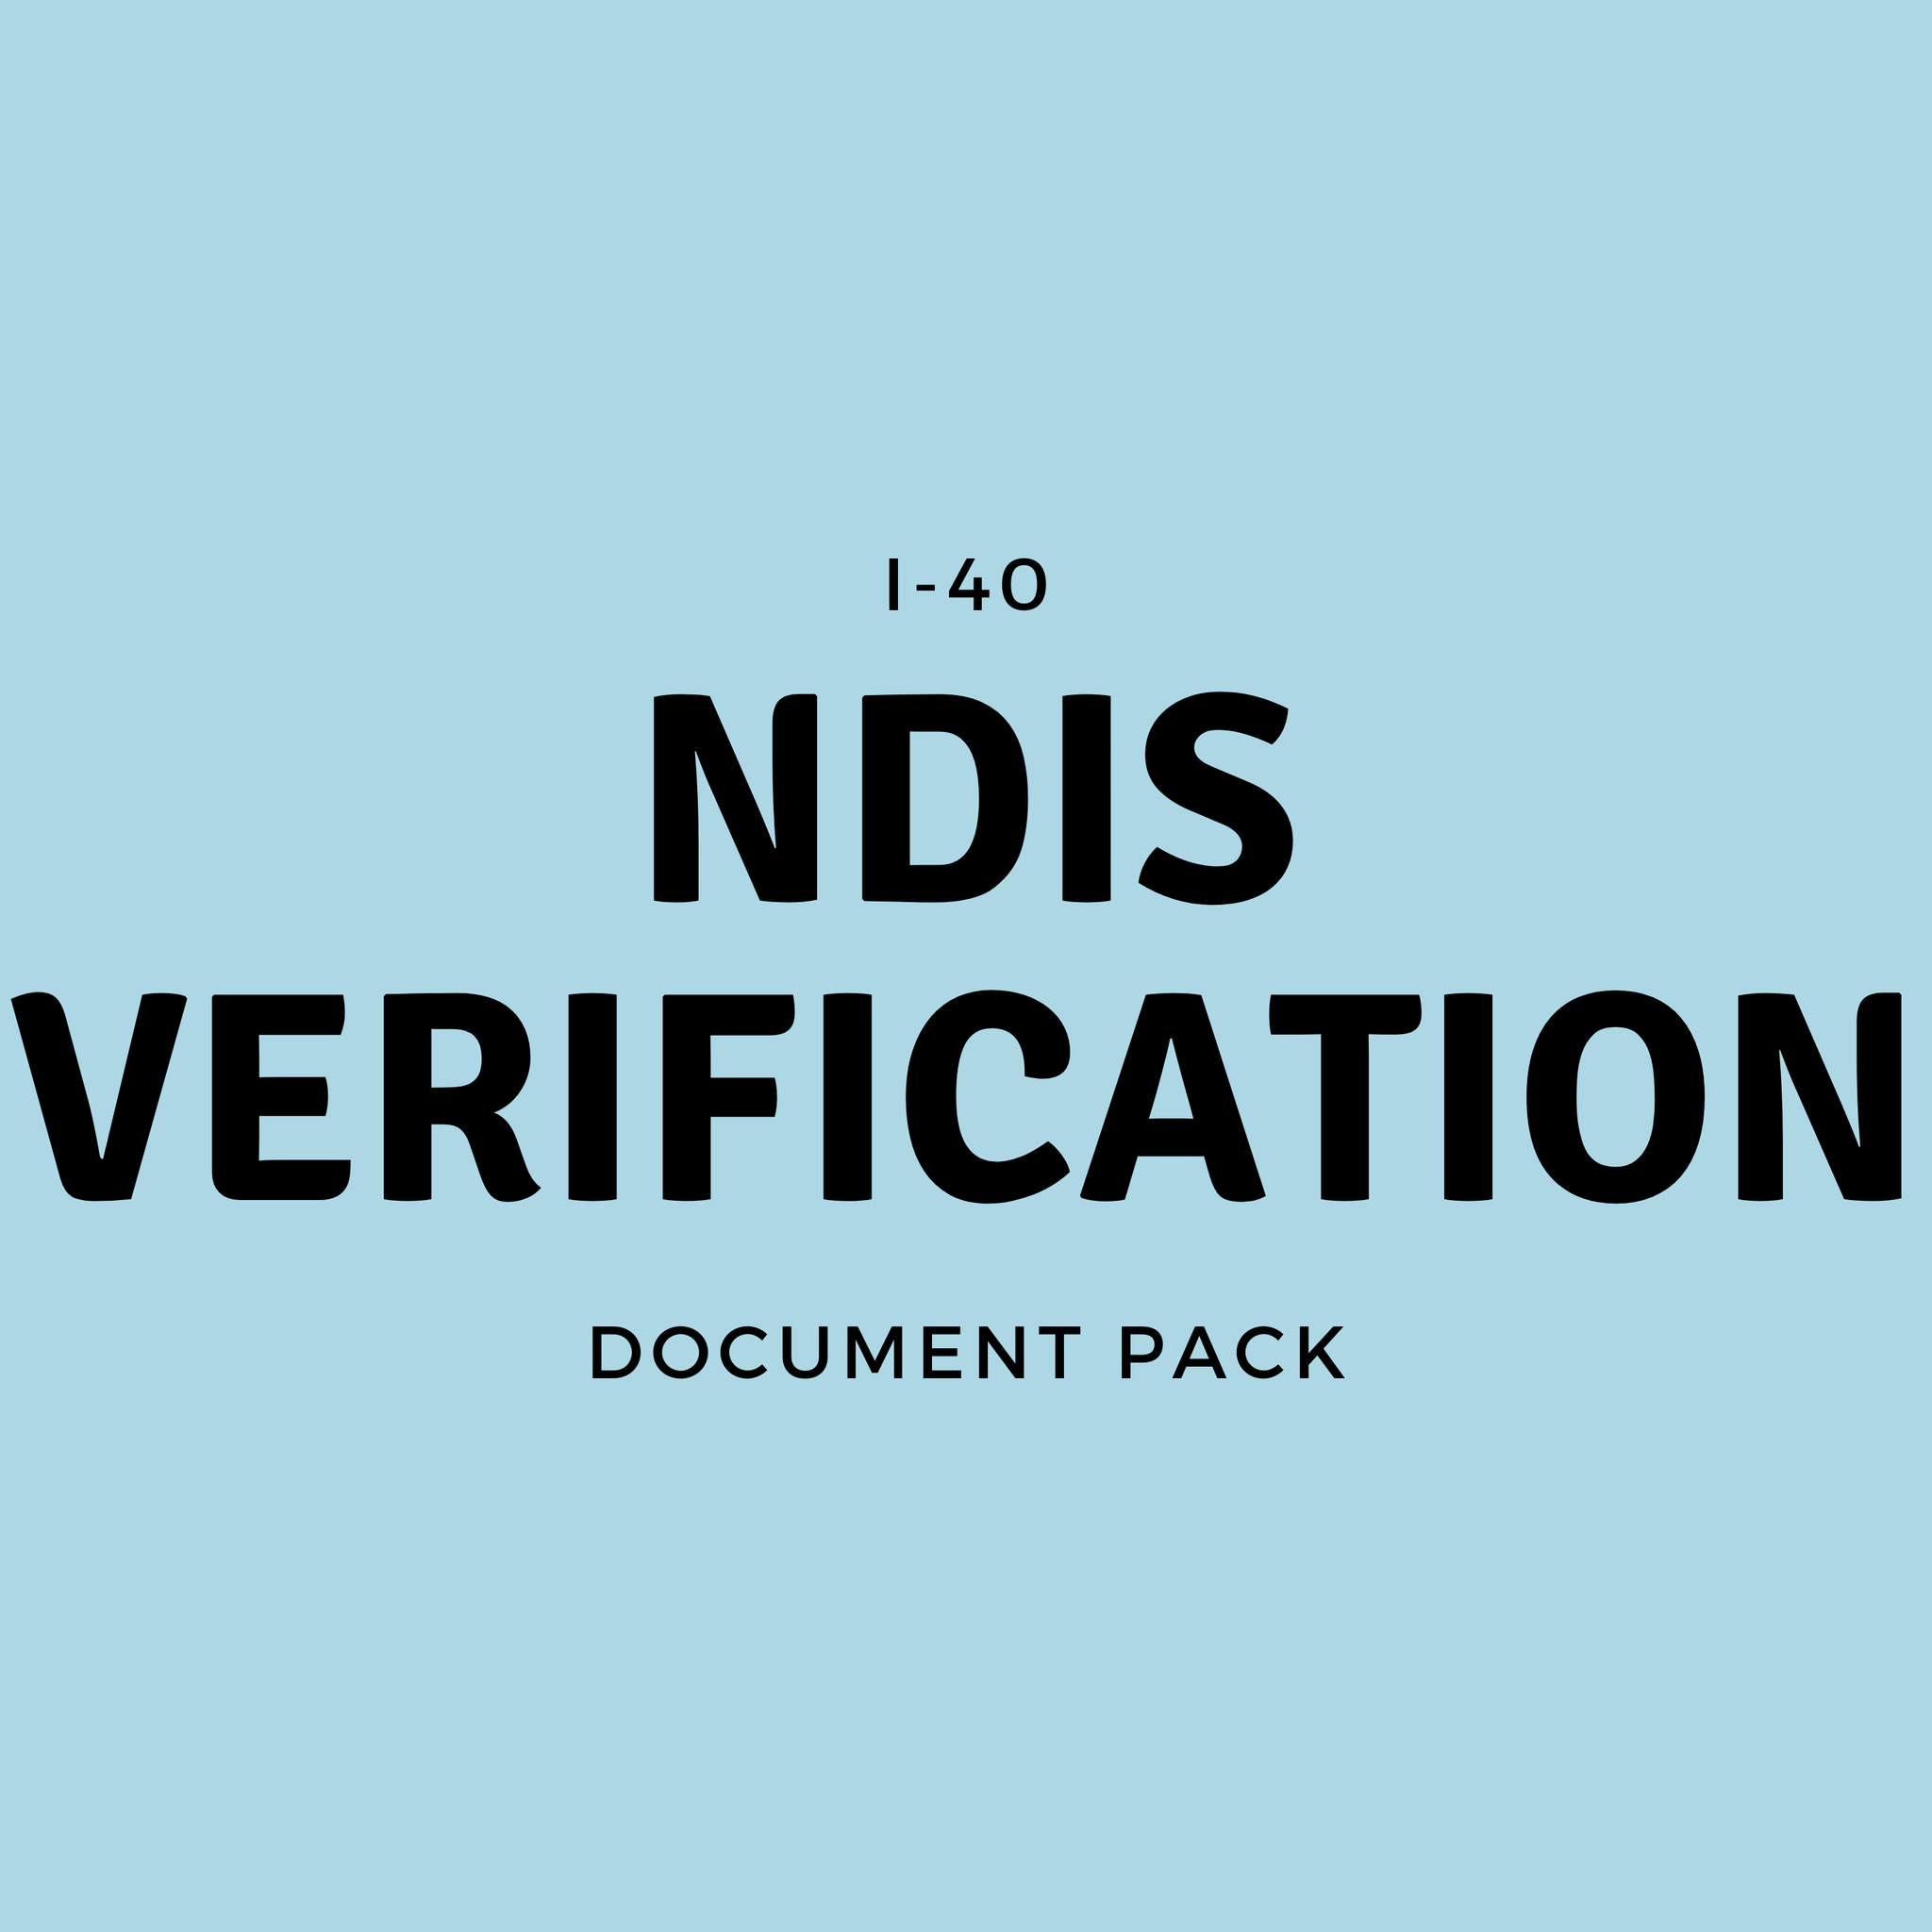 NDIS Verification: Document Pack